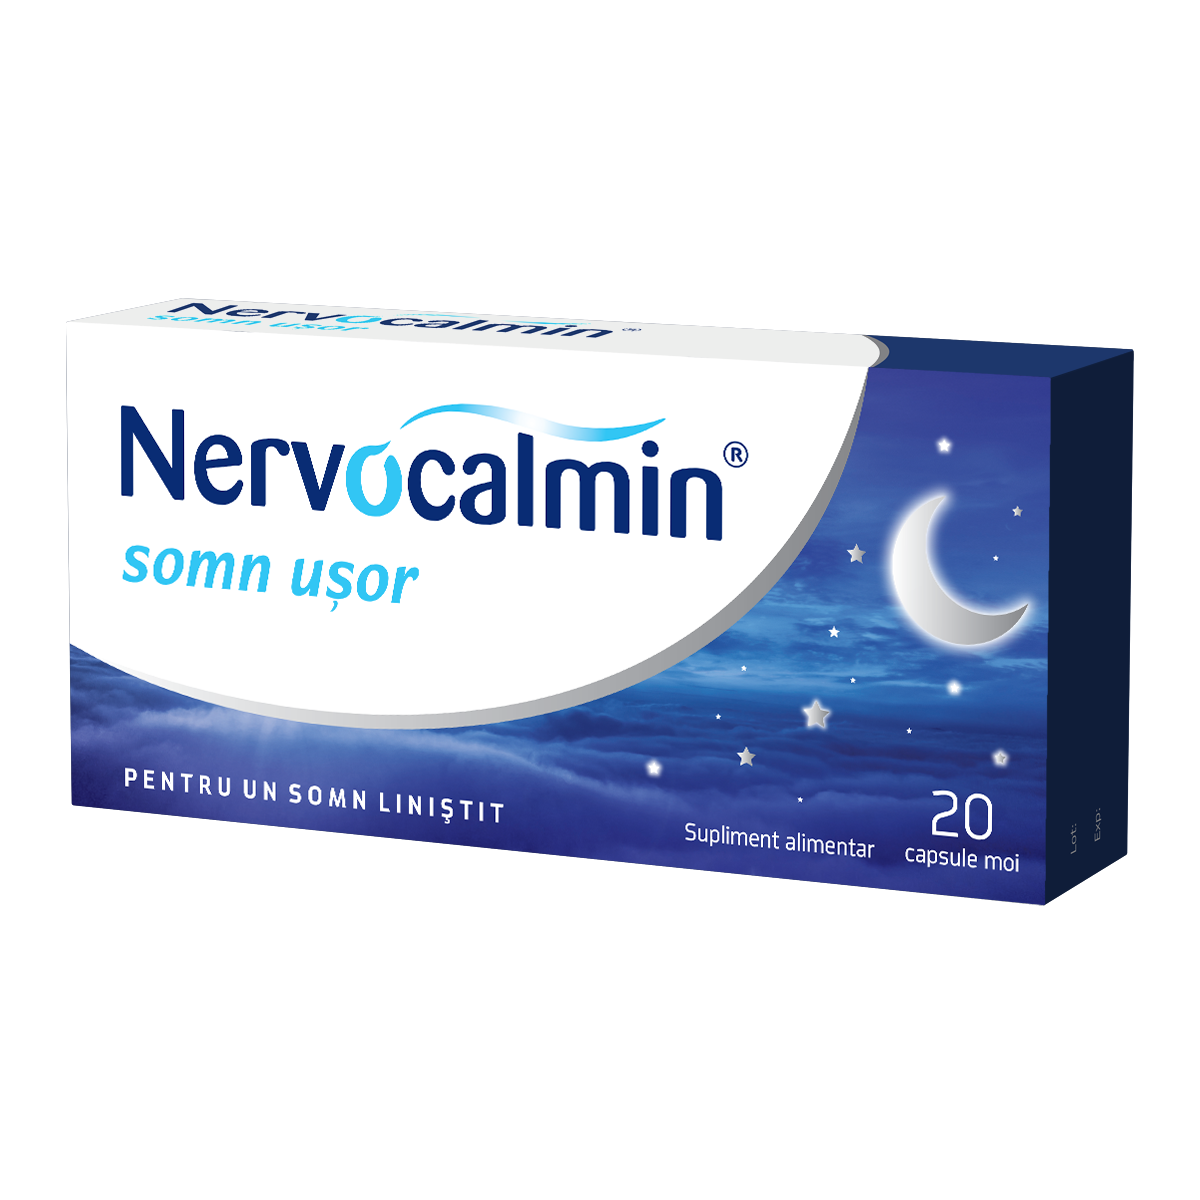 Memorie si circulatie cerebrala - Nervocalmin Somn Usor cu Valeriana Cutie 20 Capsule Moi, farmacieieftina.ro